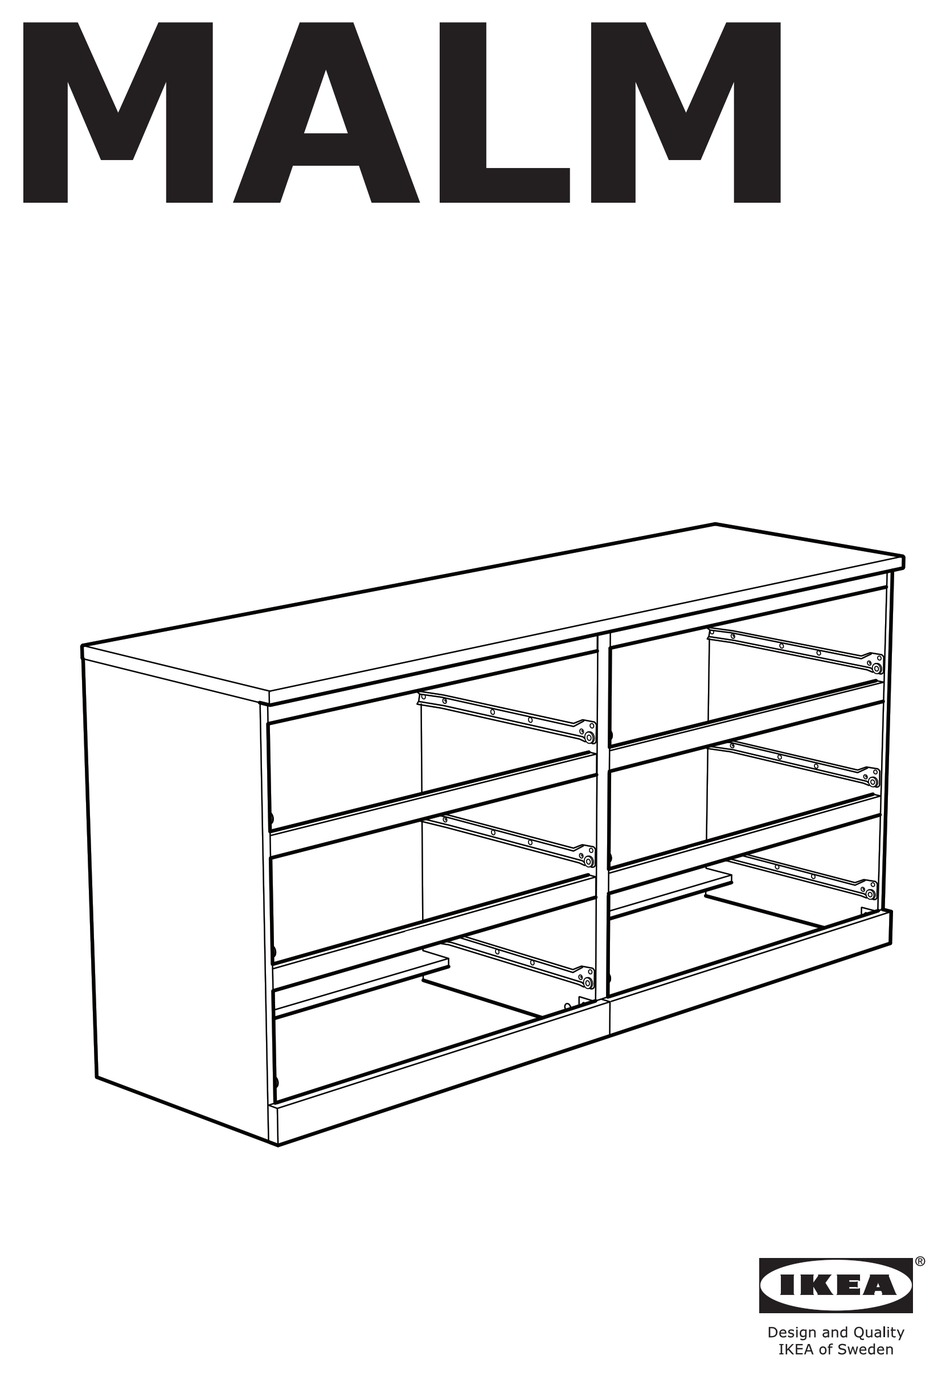 Ikea Malm Manual Pdf Manualslib, Ikea Malm Dresser Instructions 3 Drawer